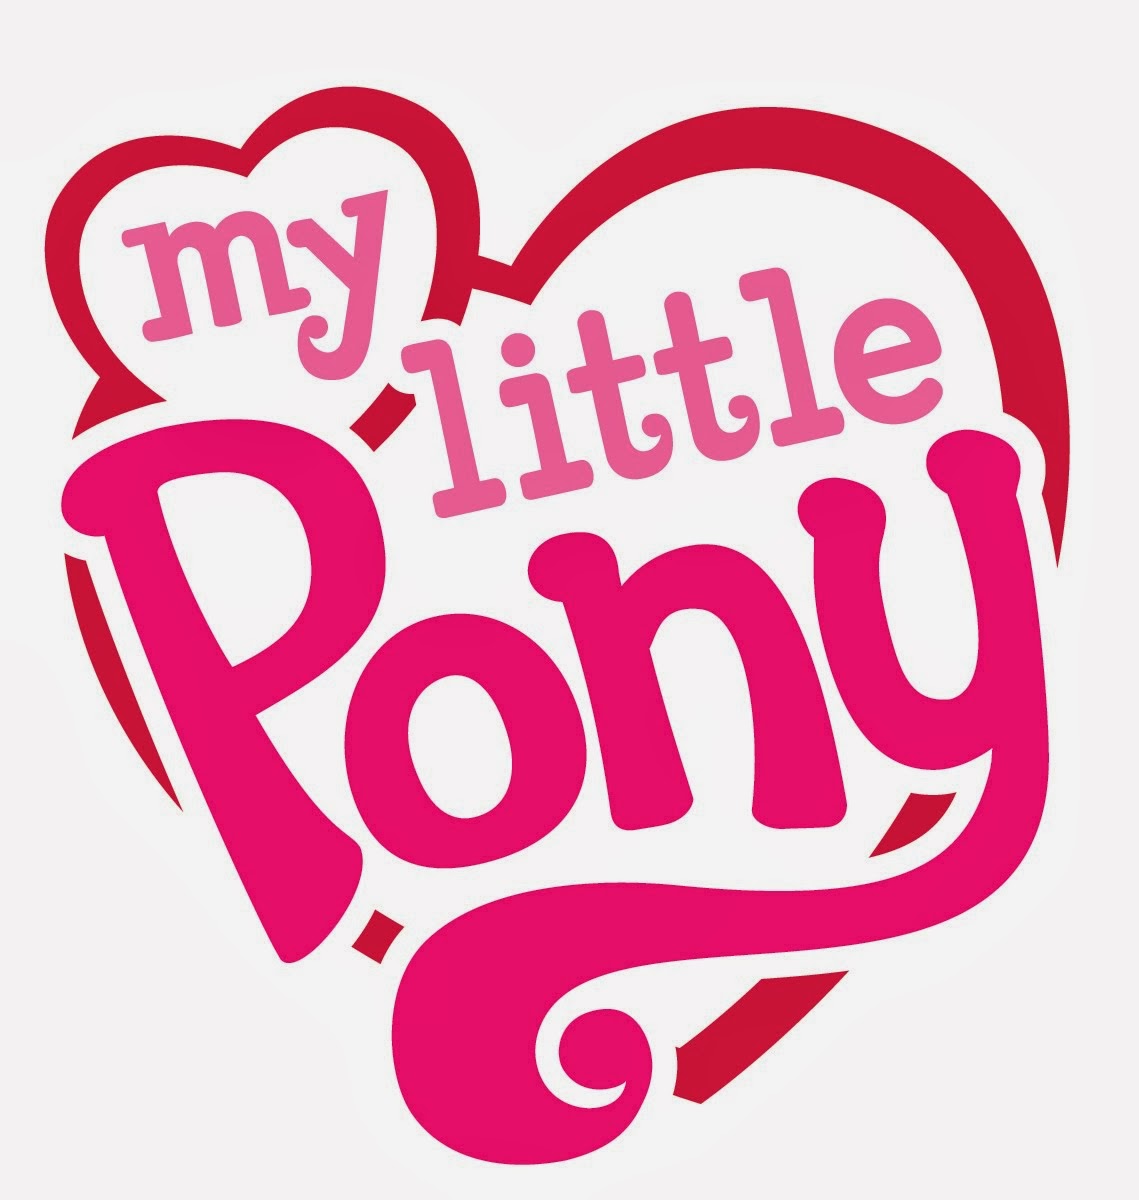 Little pony Logos